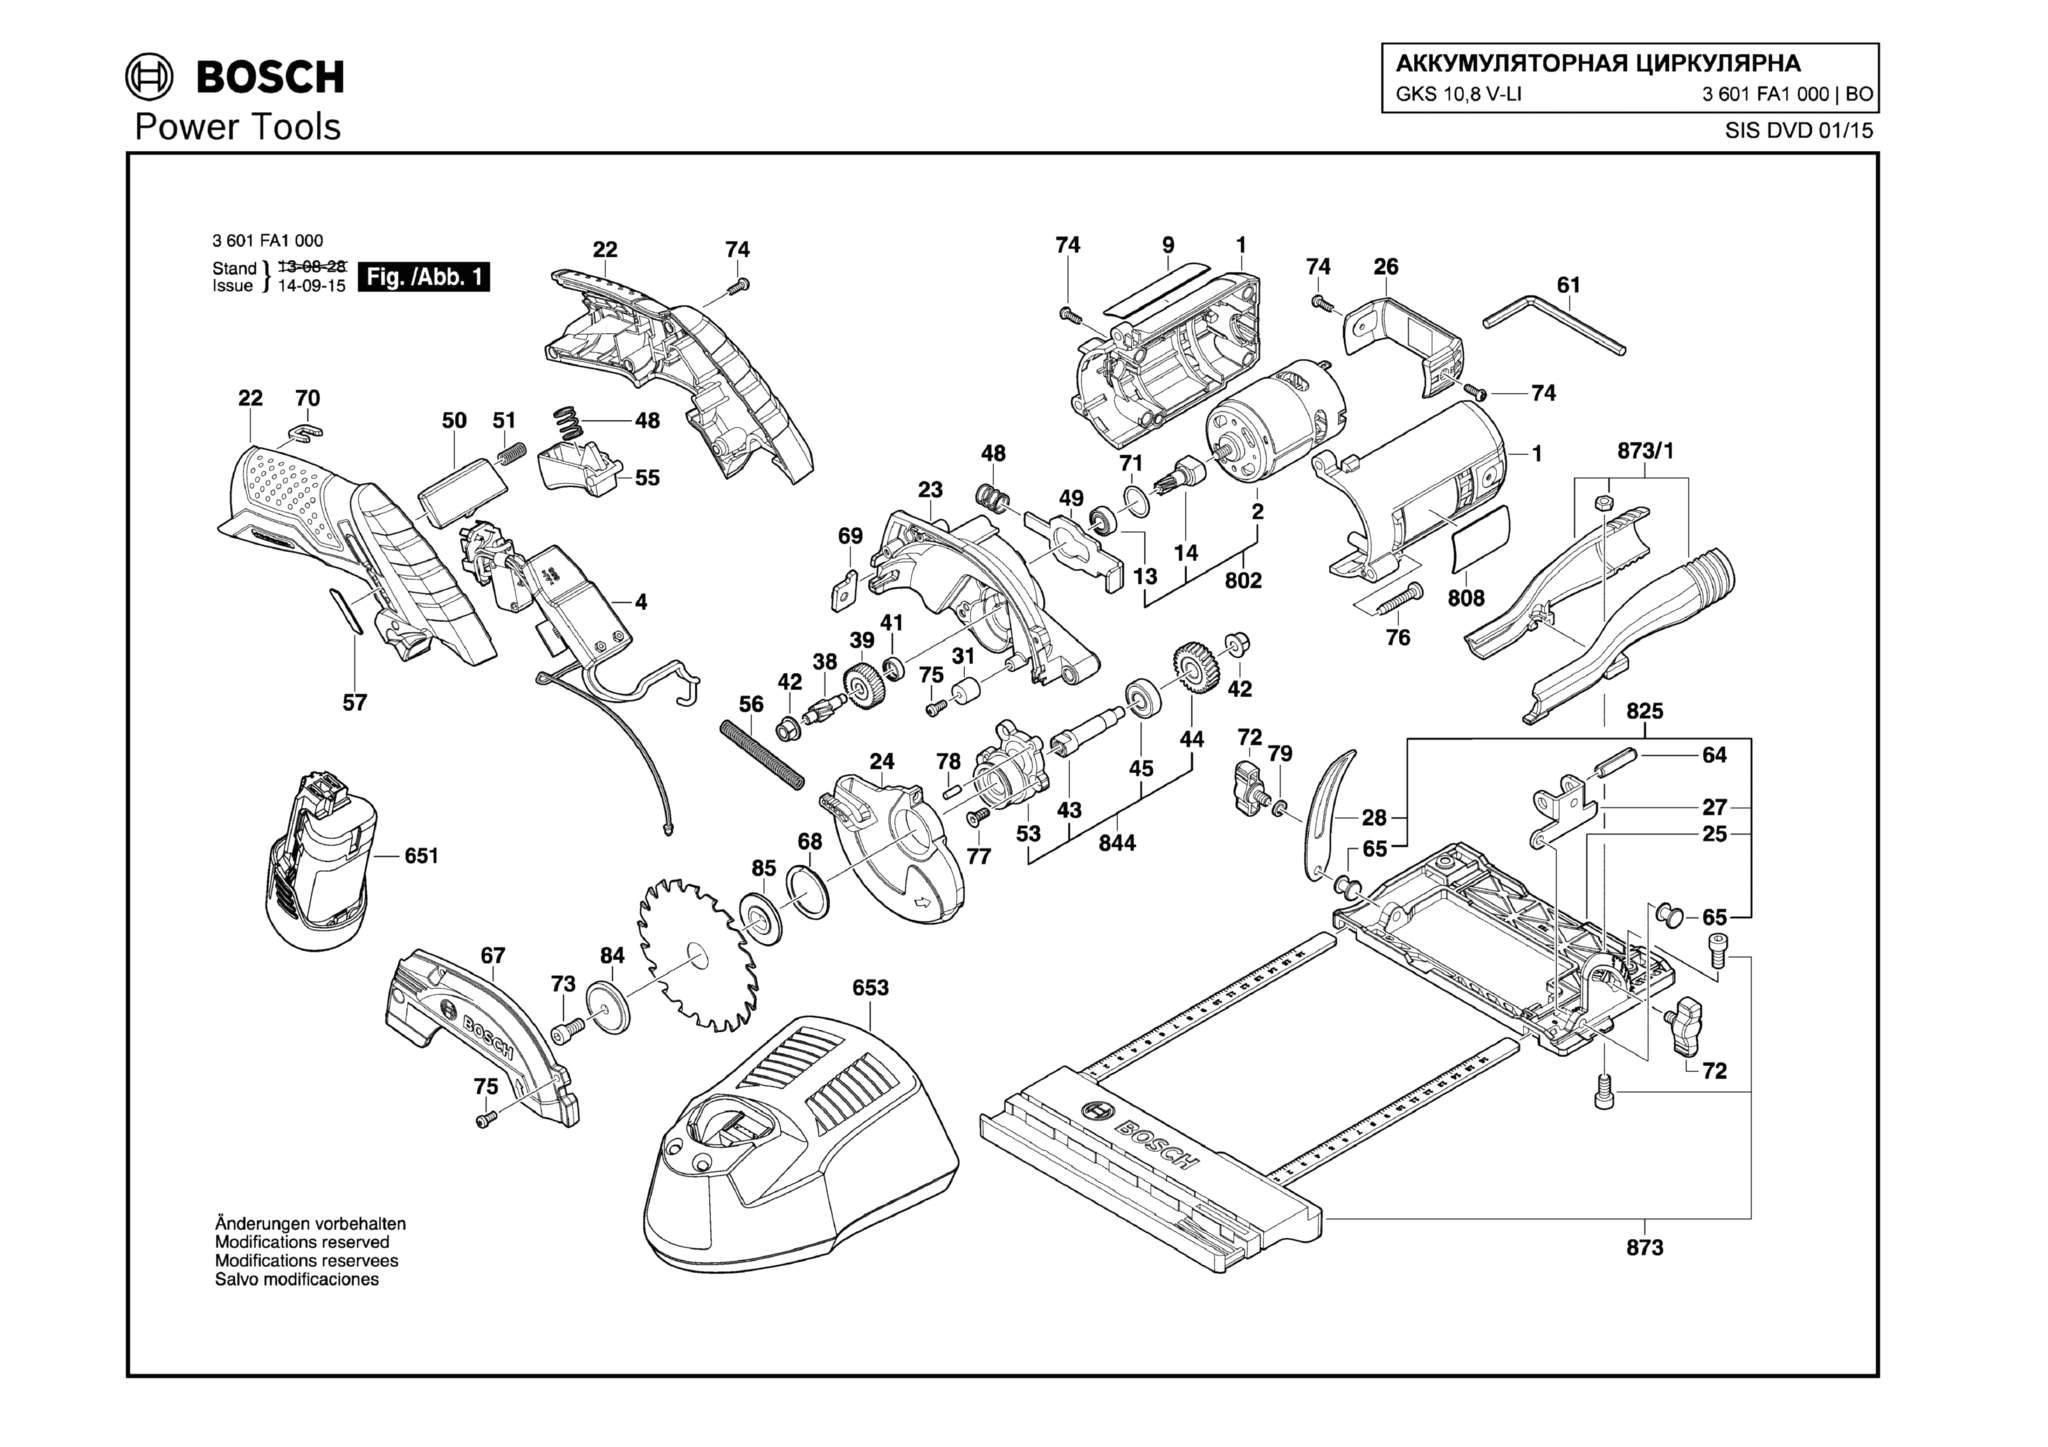 Запчасти, схема и деталировка Bosch GKS 10,8 V-LI (ТИП 3601FA1000)